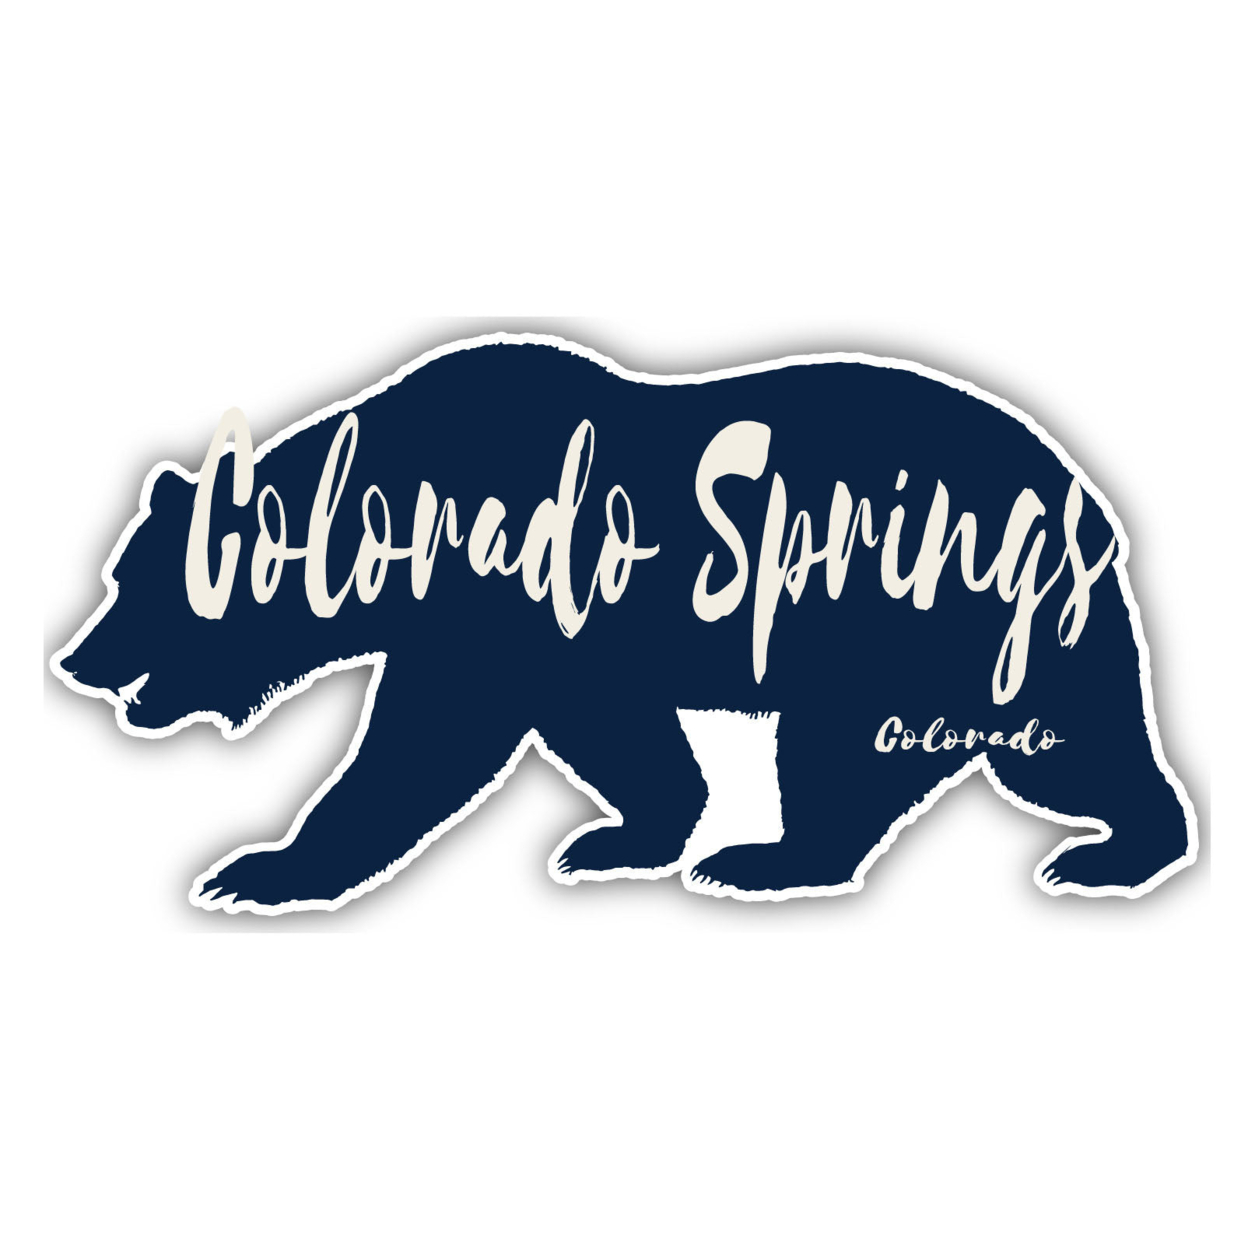 Colorado Springs Colorado Souvenir Decorative Stickers (Choose Theme And Size) - Single Unit, 2-Inch, Tent